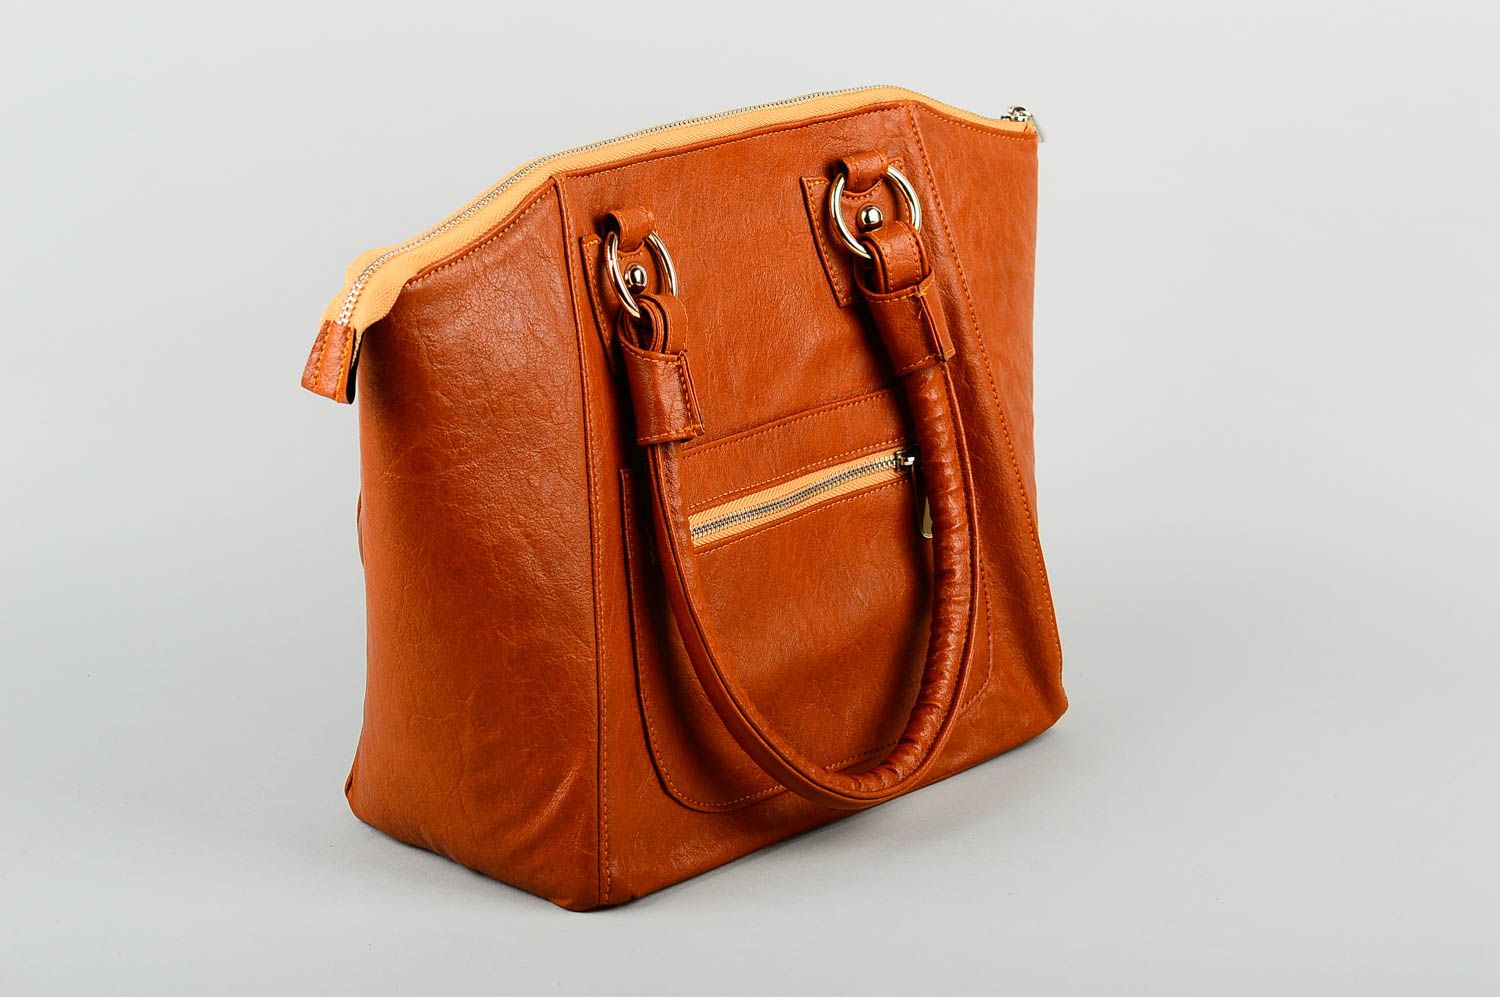 Stylish handmade leather bag leather goods handbag design fashion trends photo 1